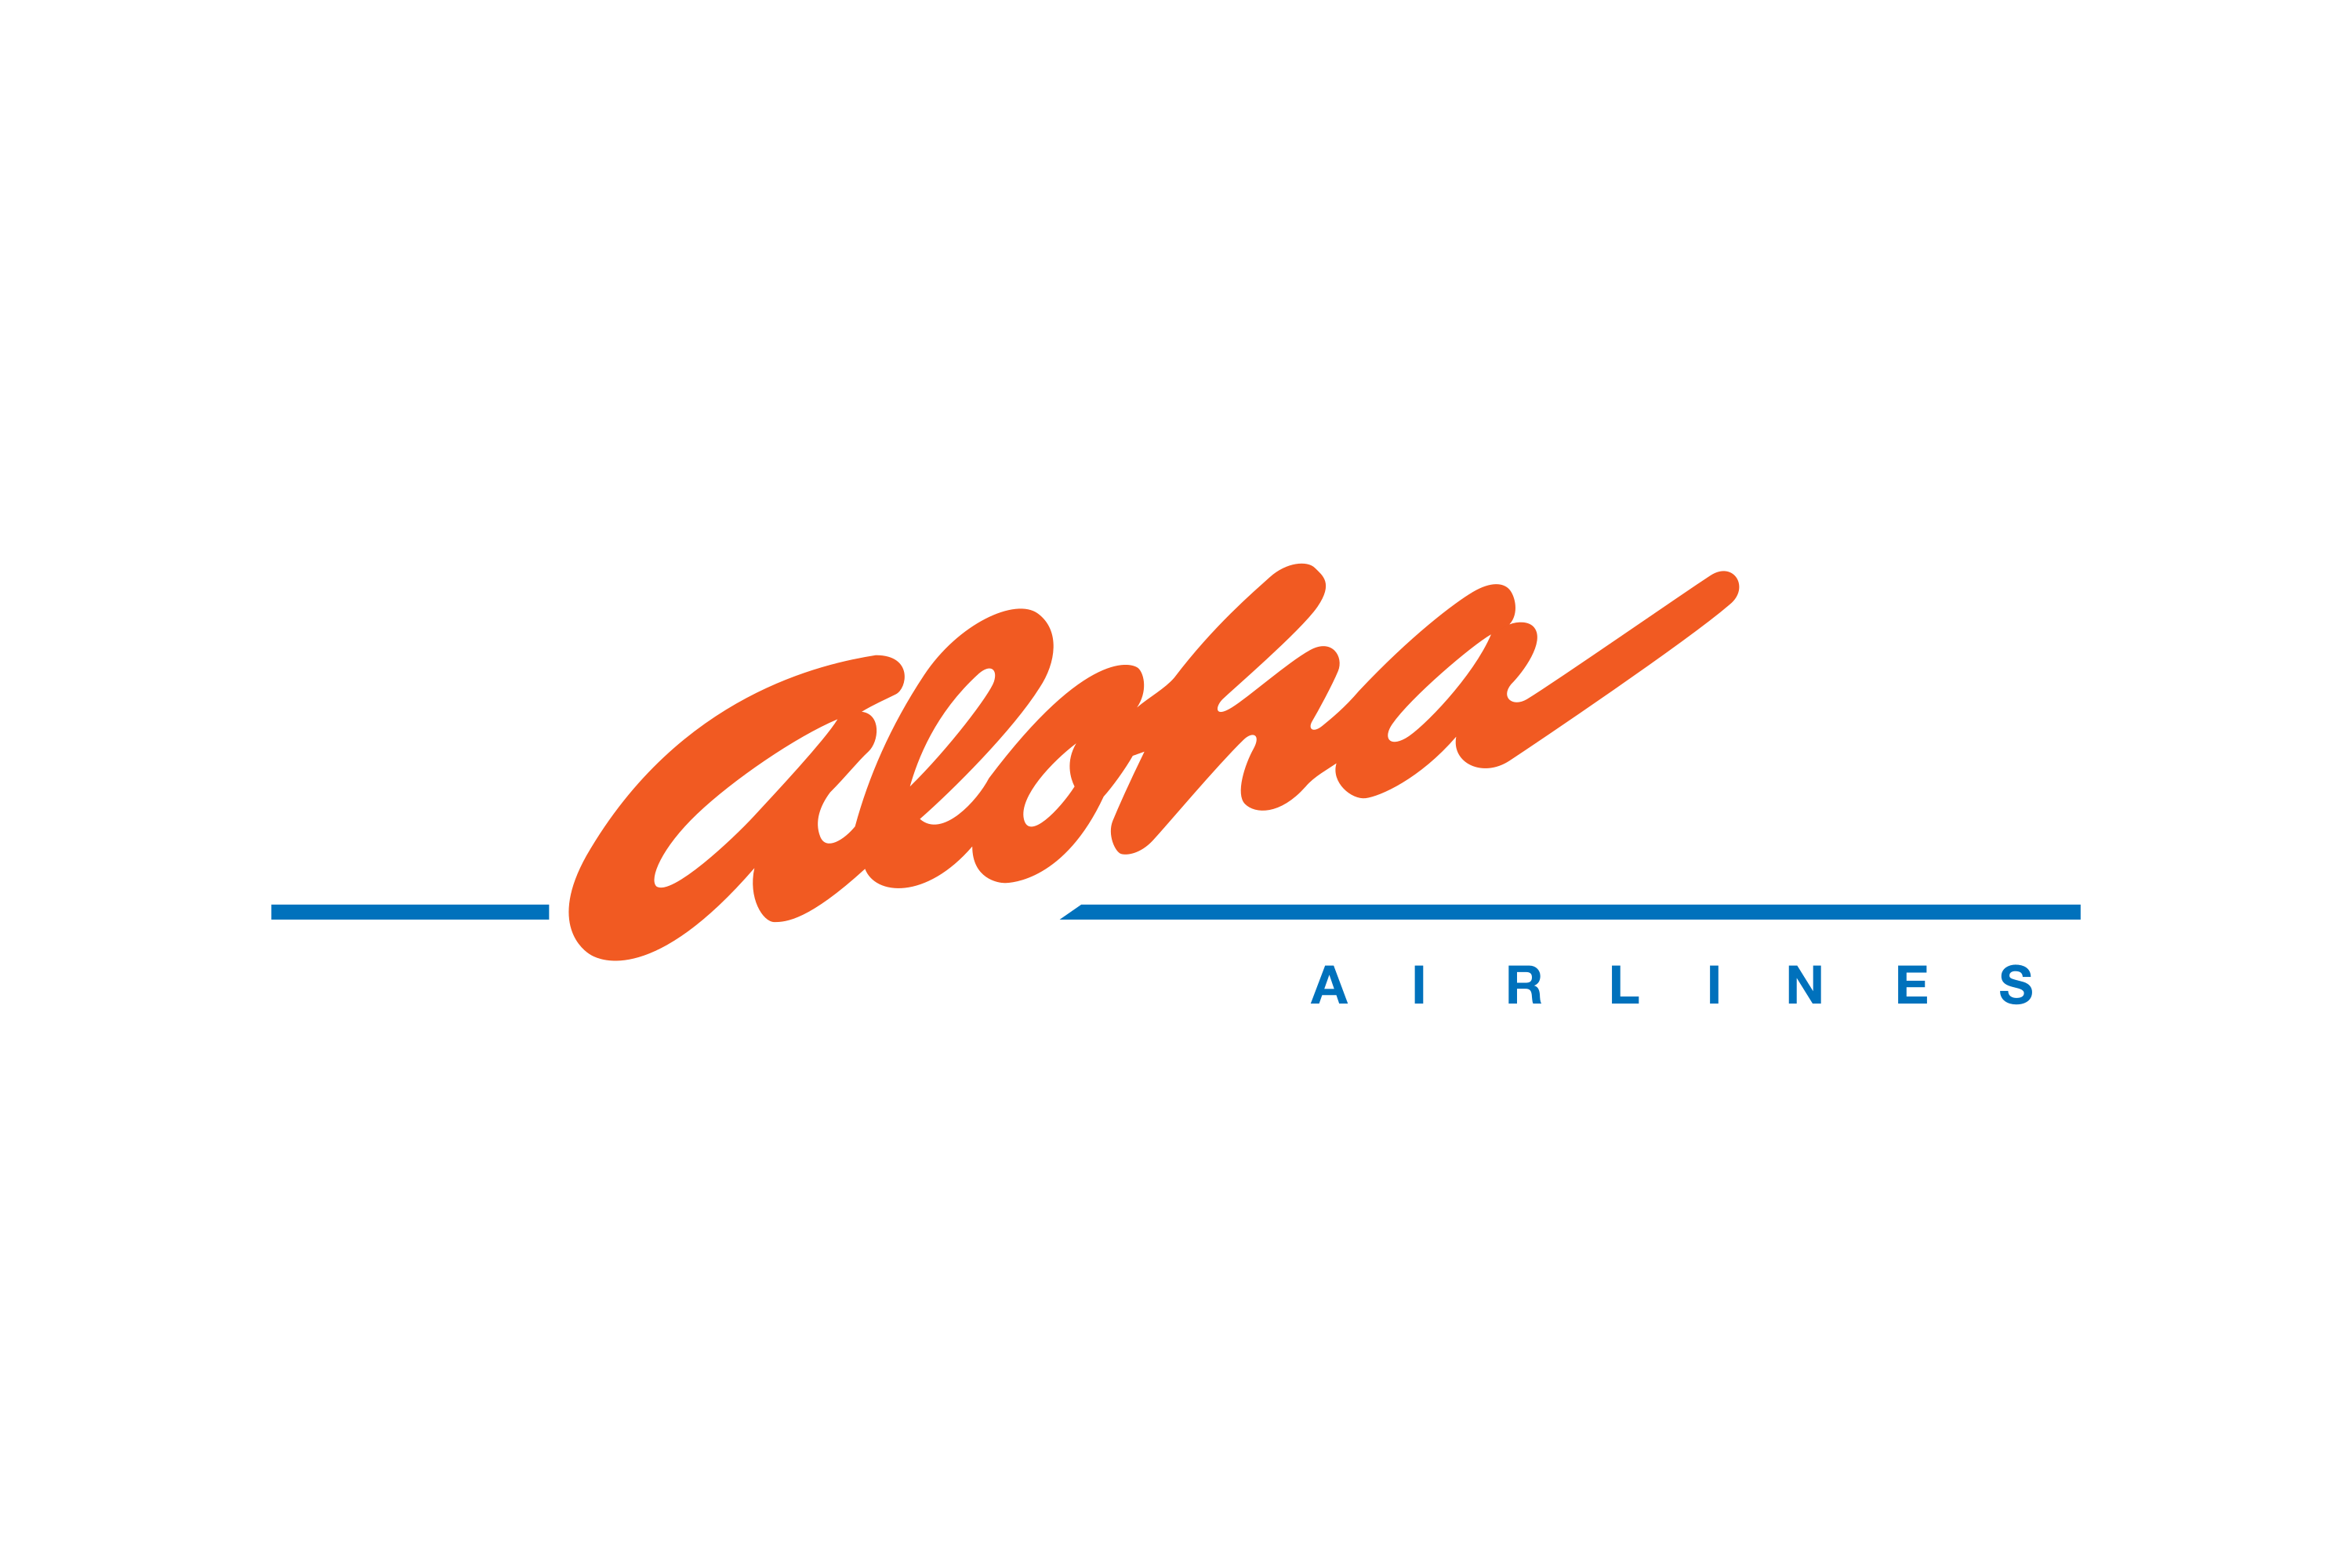 Aloha Airlines Logo